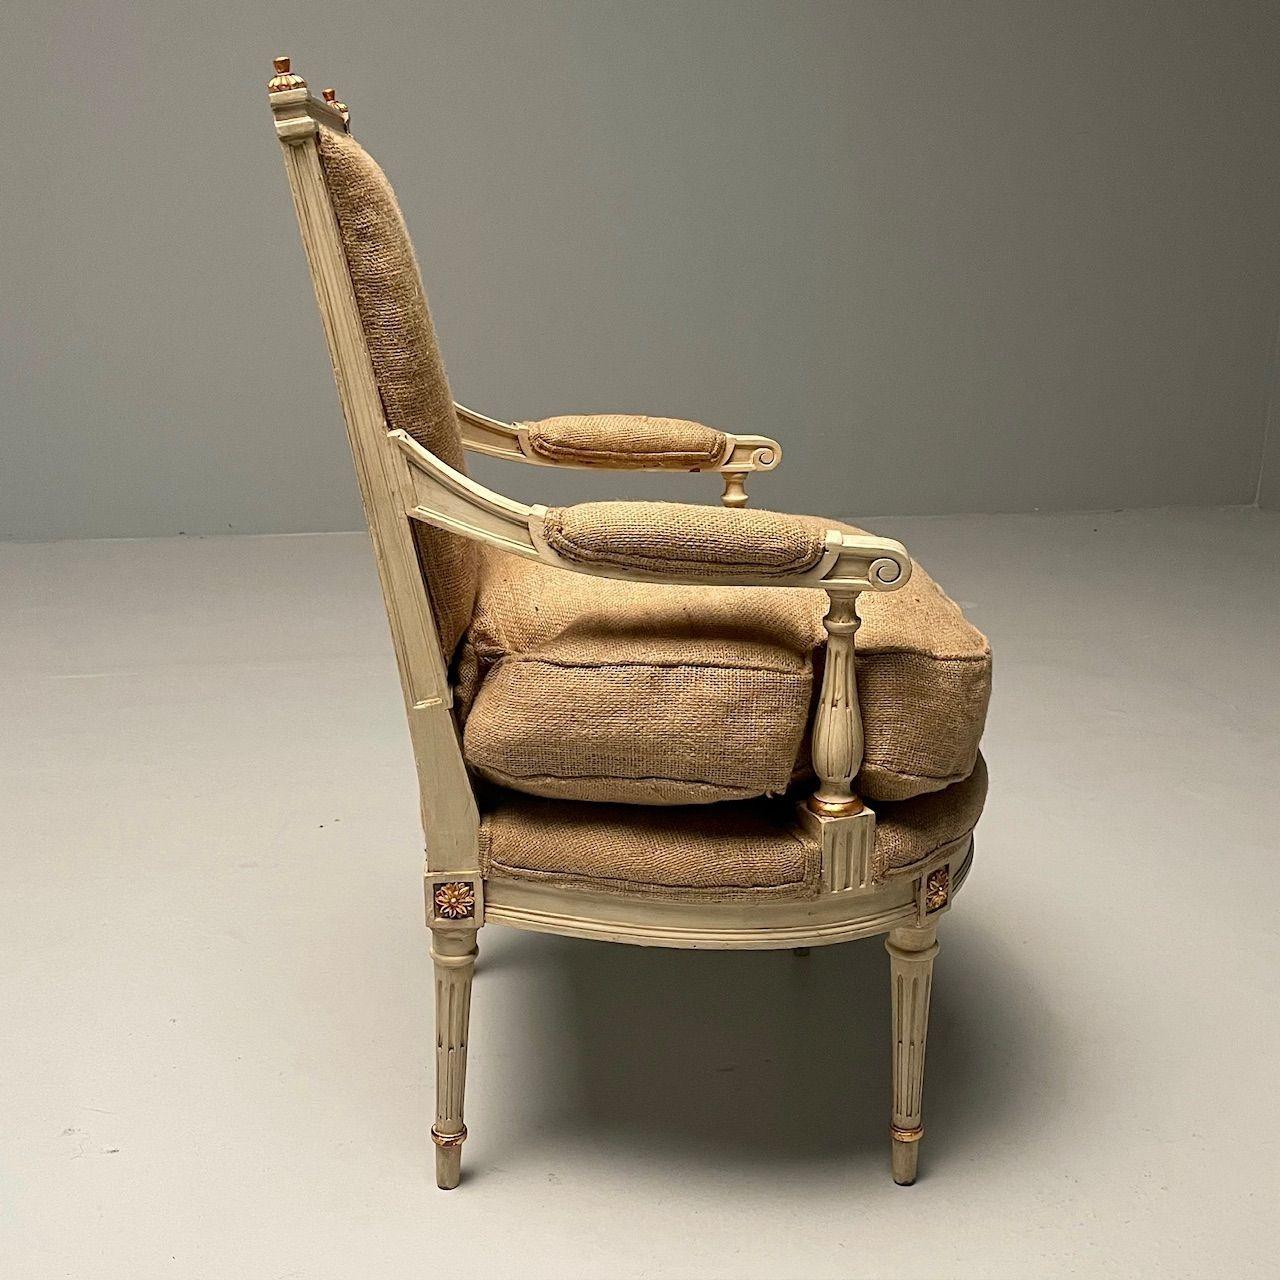 Maison Jansen Style, French Louis XVI, Arm Chairs, Giltwood, White Paint, Burlap For Sale 1